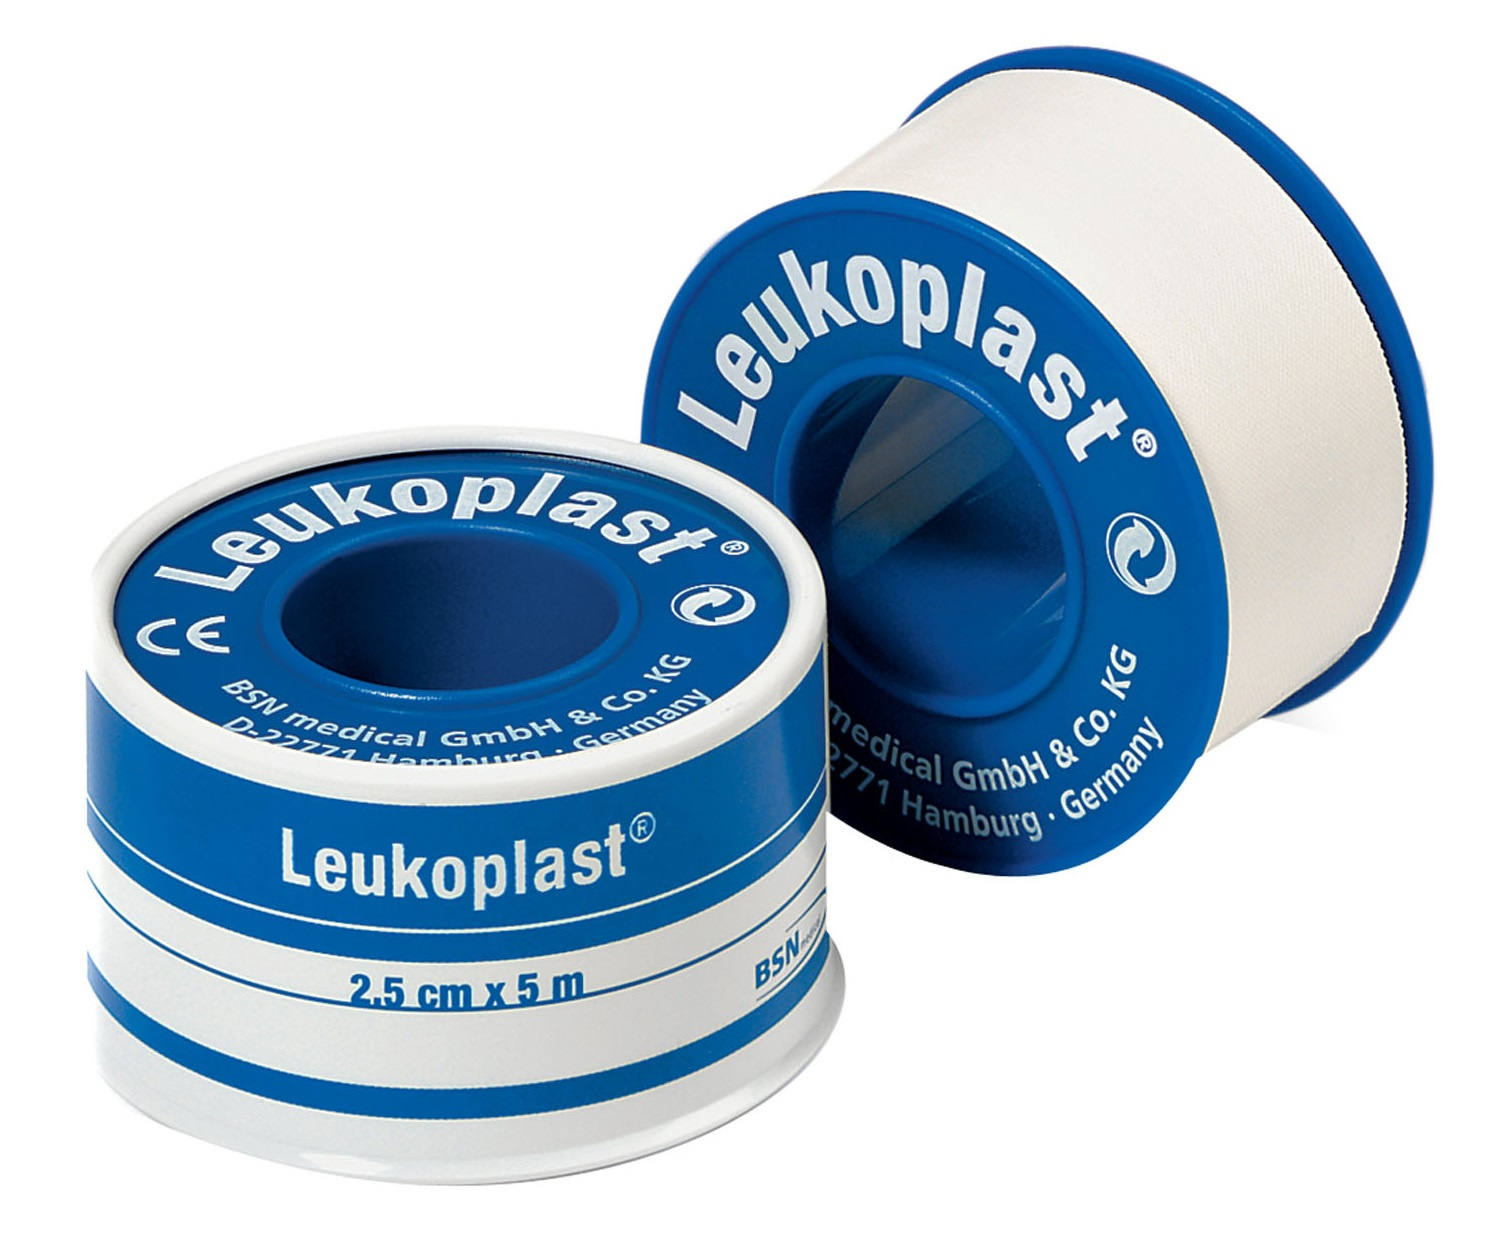 Leukoplast Waterproof White Tape 2.5cm x 5m image 0